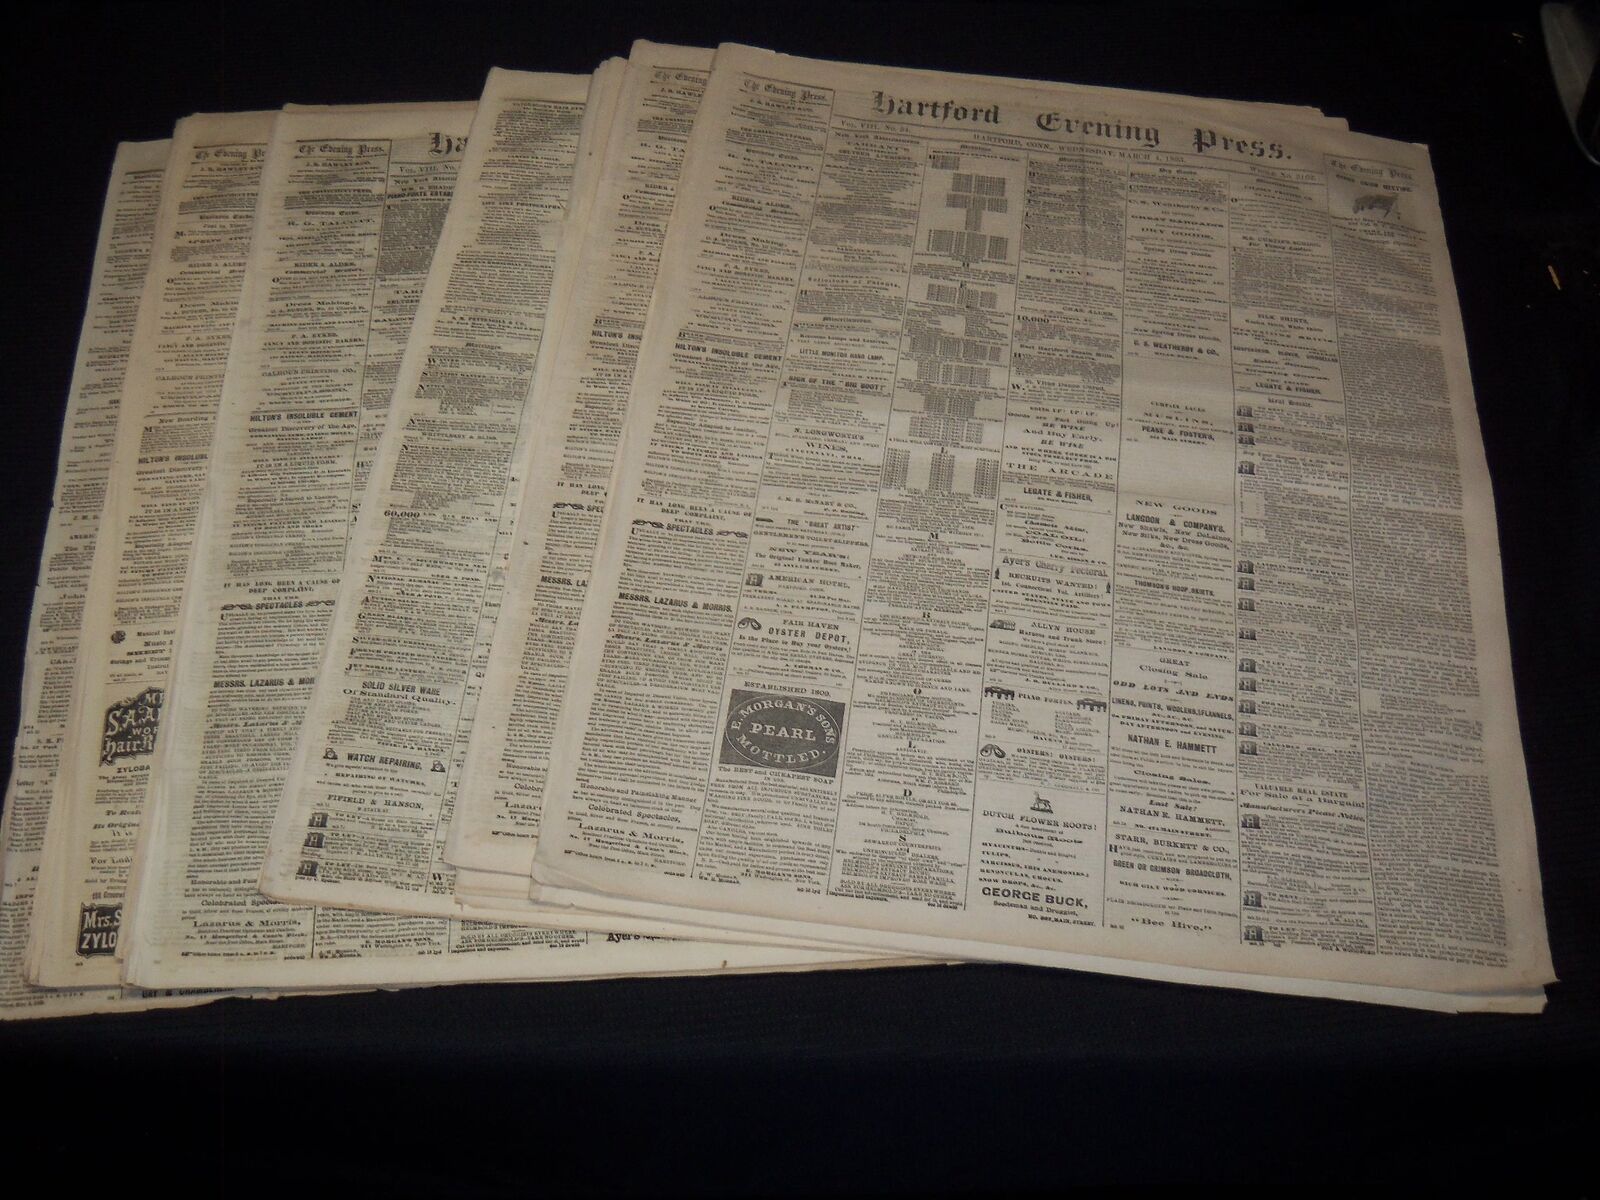 1863 HARTFORD EVENING PRESS NEWSPAPER LOT OF 24 - CIVIL WAR - NTL 16A